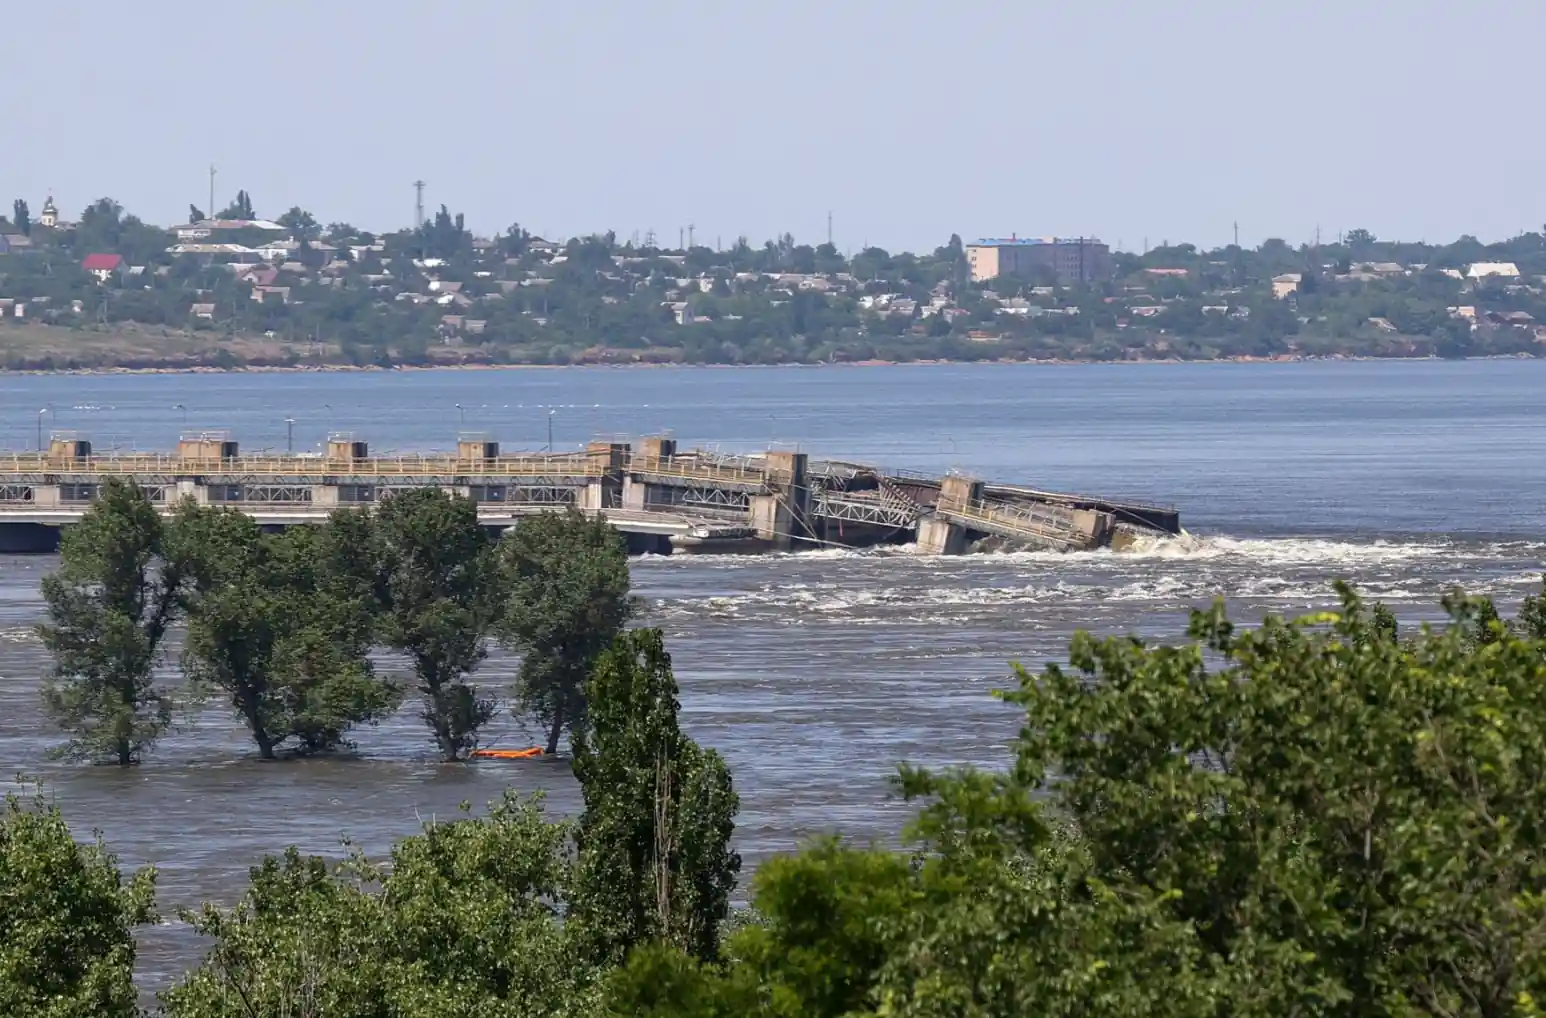 Bendungan Kakhovka Meledak, Banyak Kota Terancam Banjir